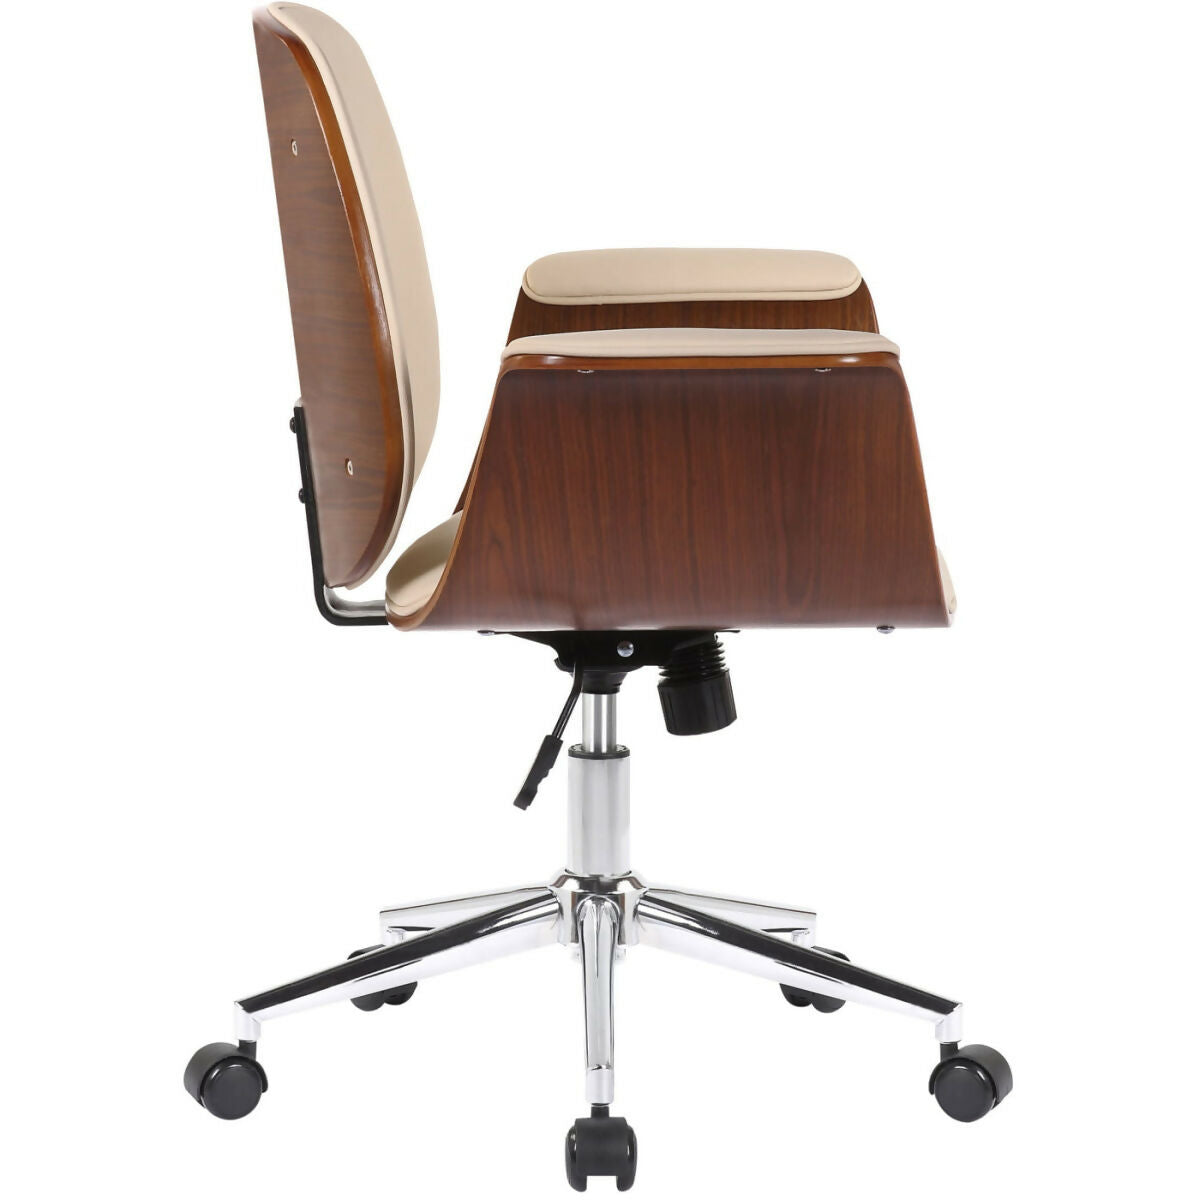 Kemberg office chair - Walnut - Cream - 0